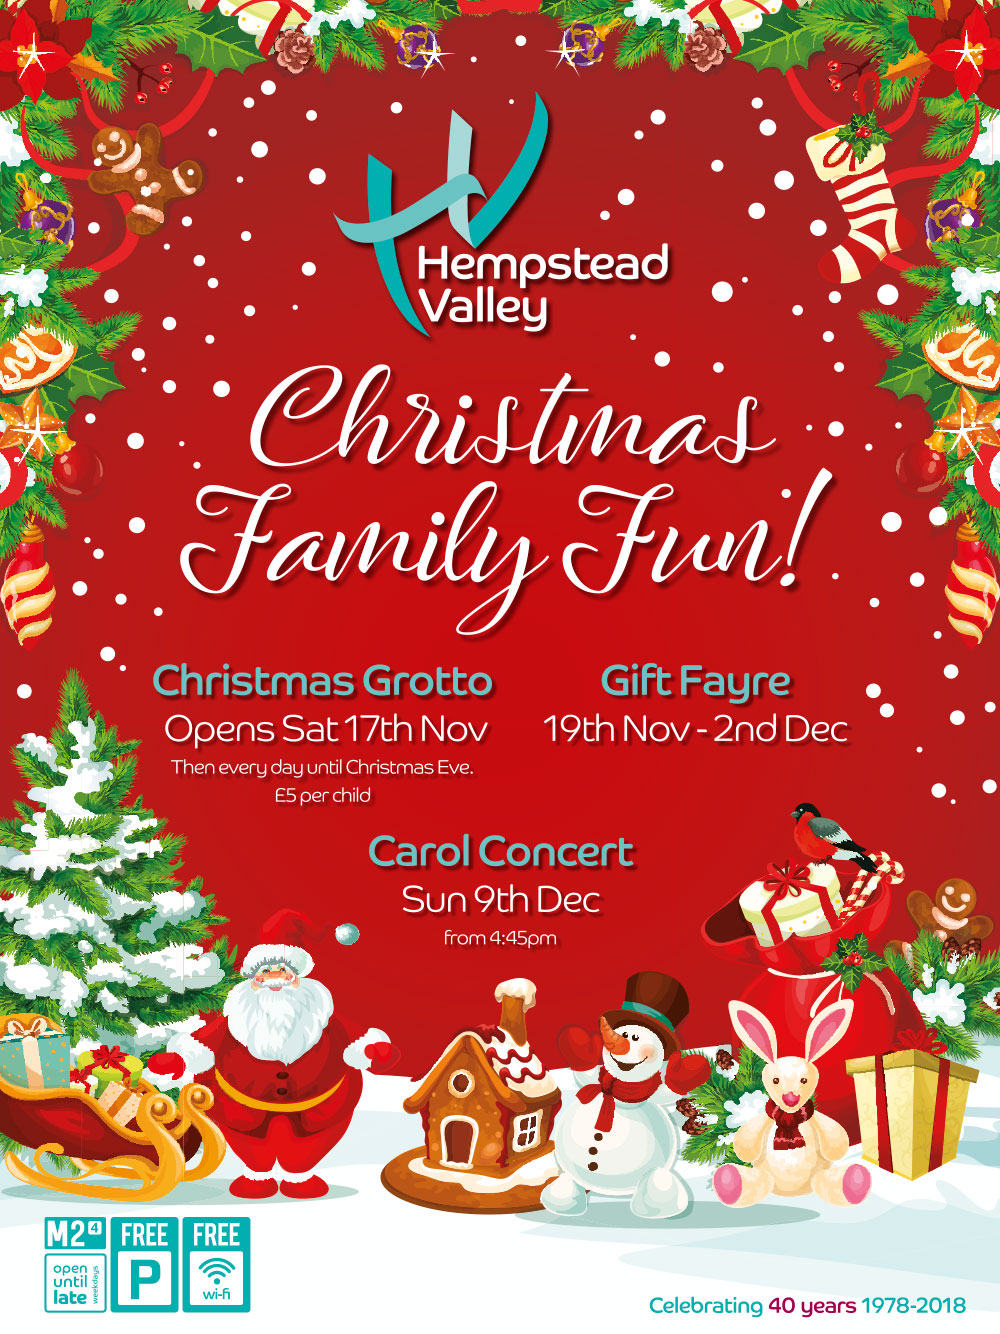 Christmas Carol Concert | Sunday 9th December at 4.45pm